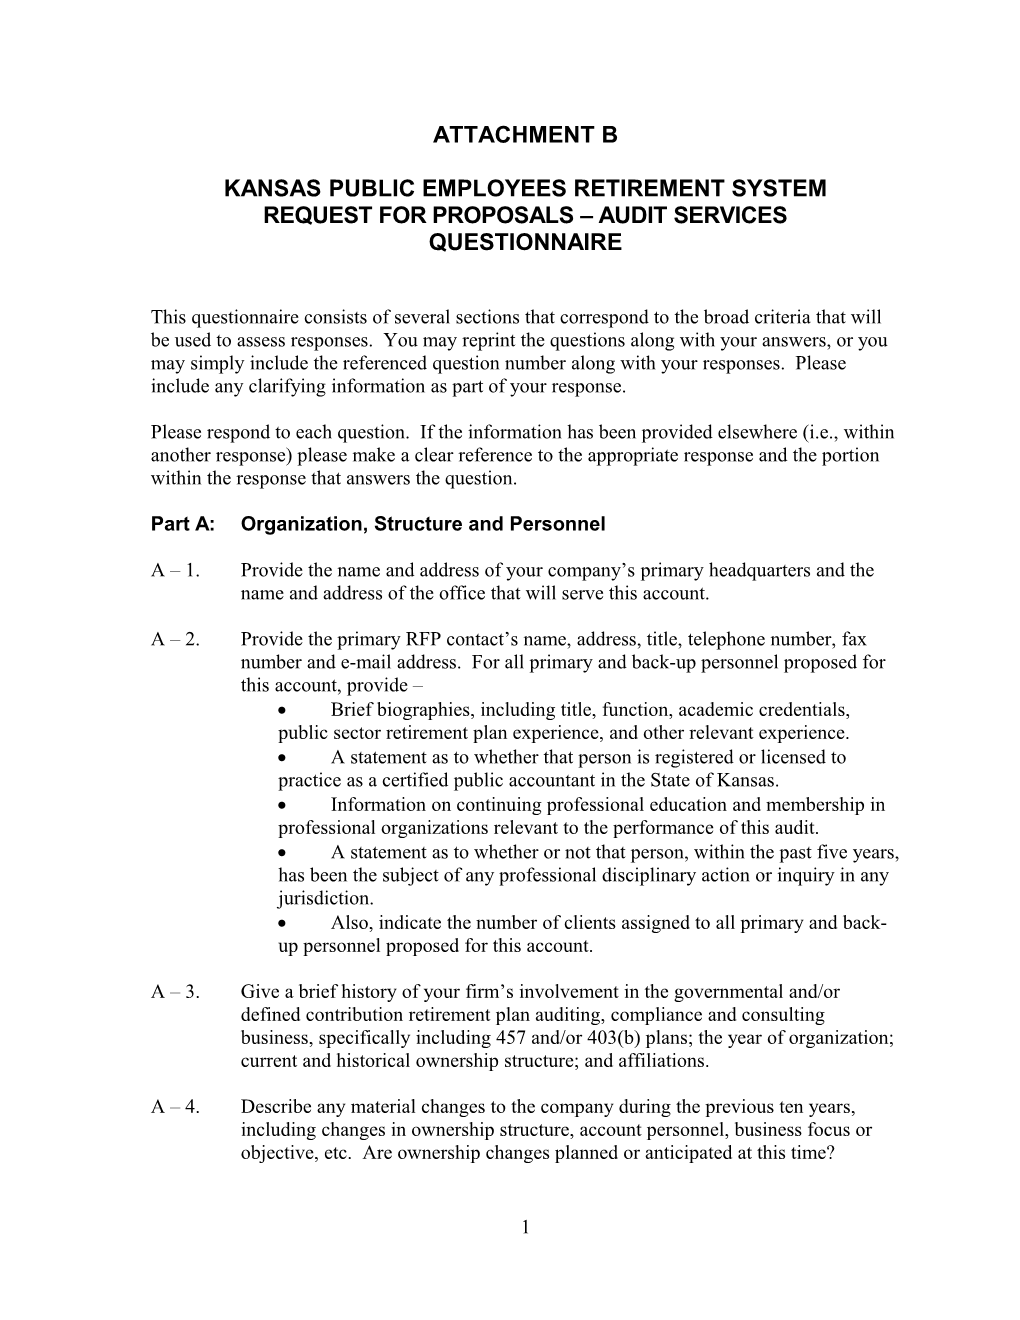 Kansas Public Employees Retirement System